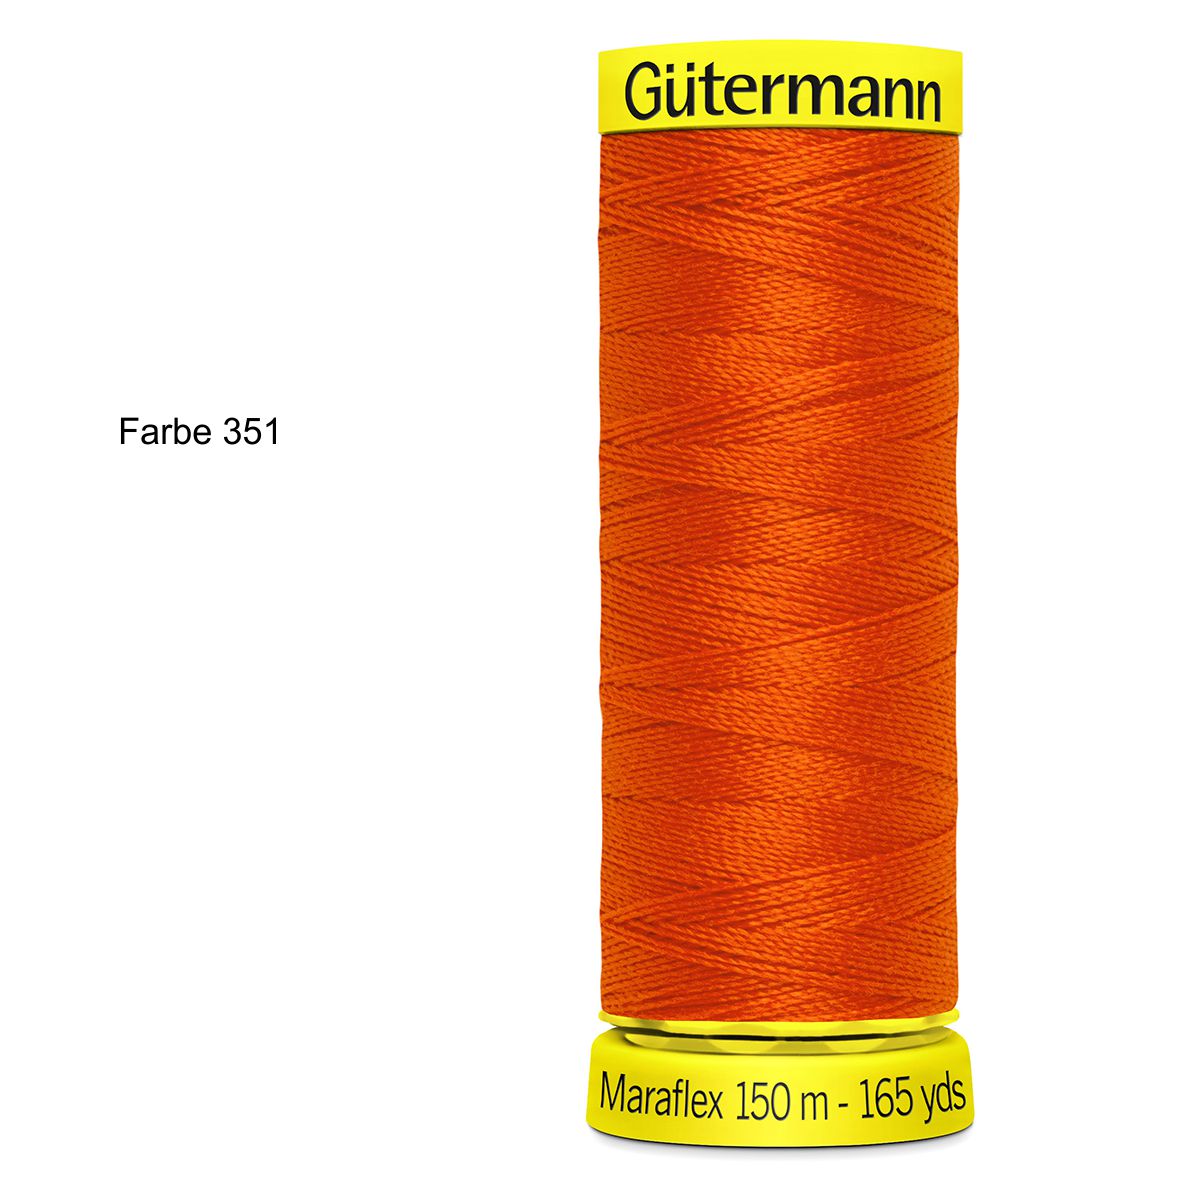 Gütermann Maraflex Elastic- Nähgarn 150m Farbe 351